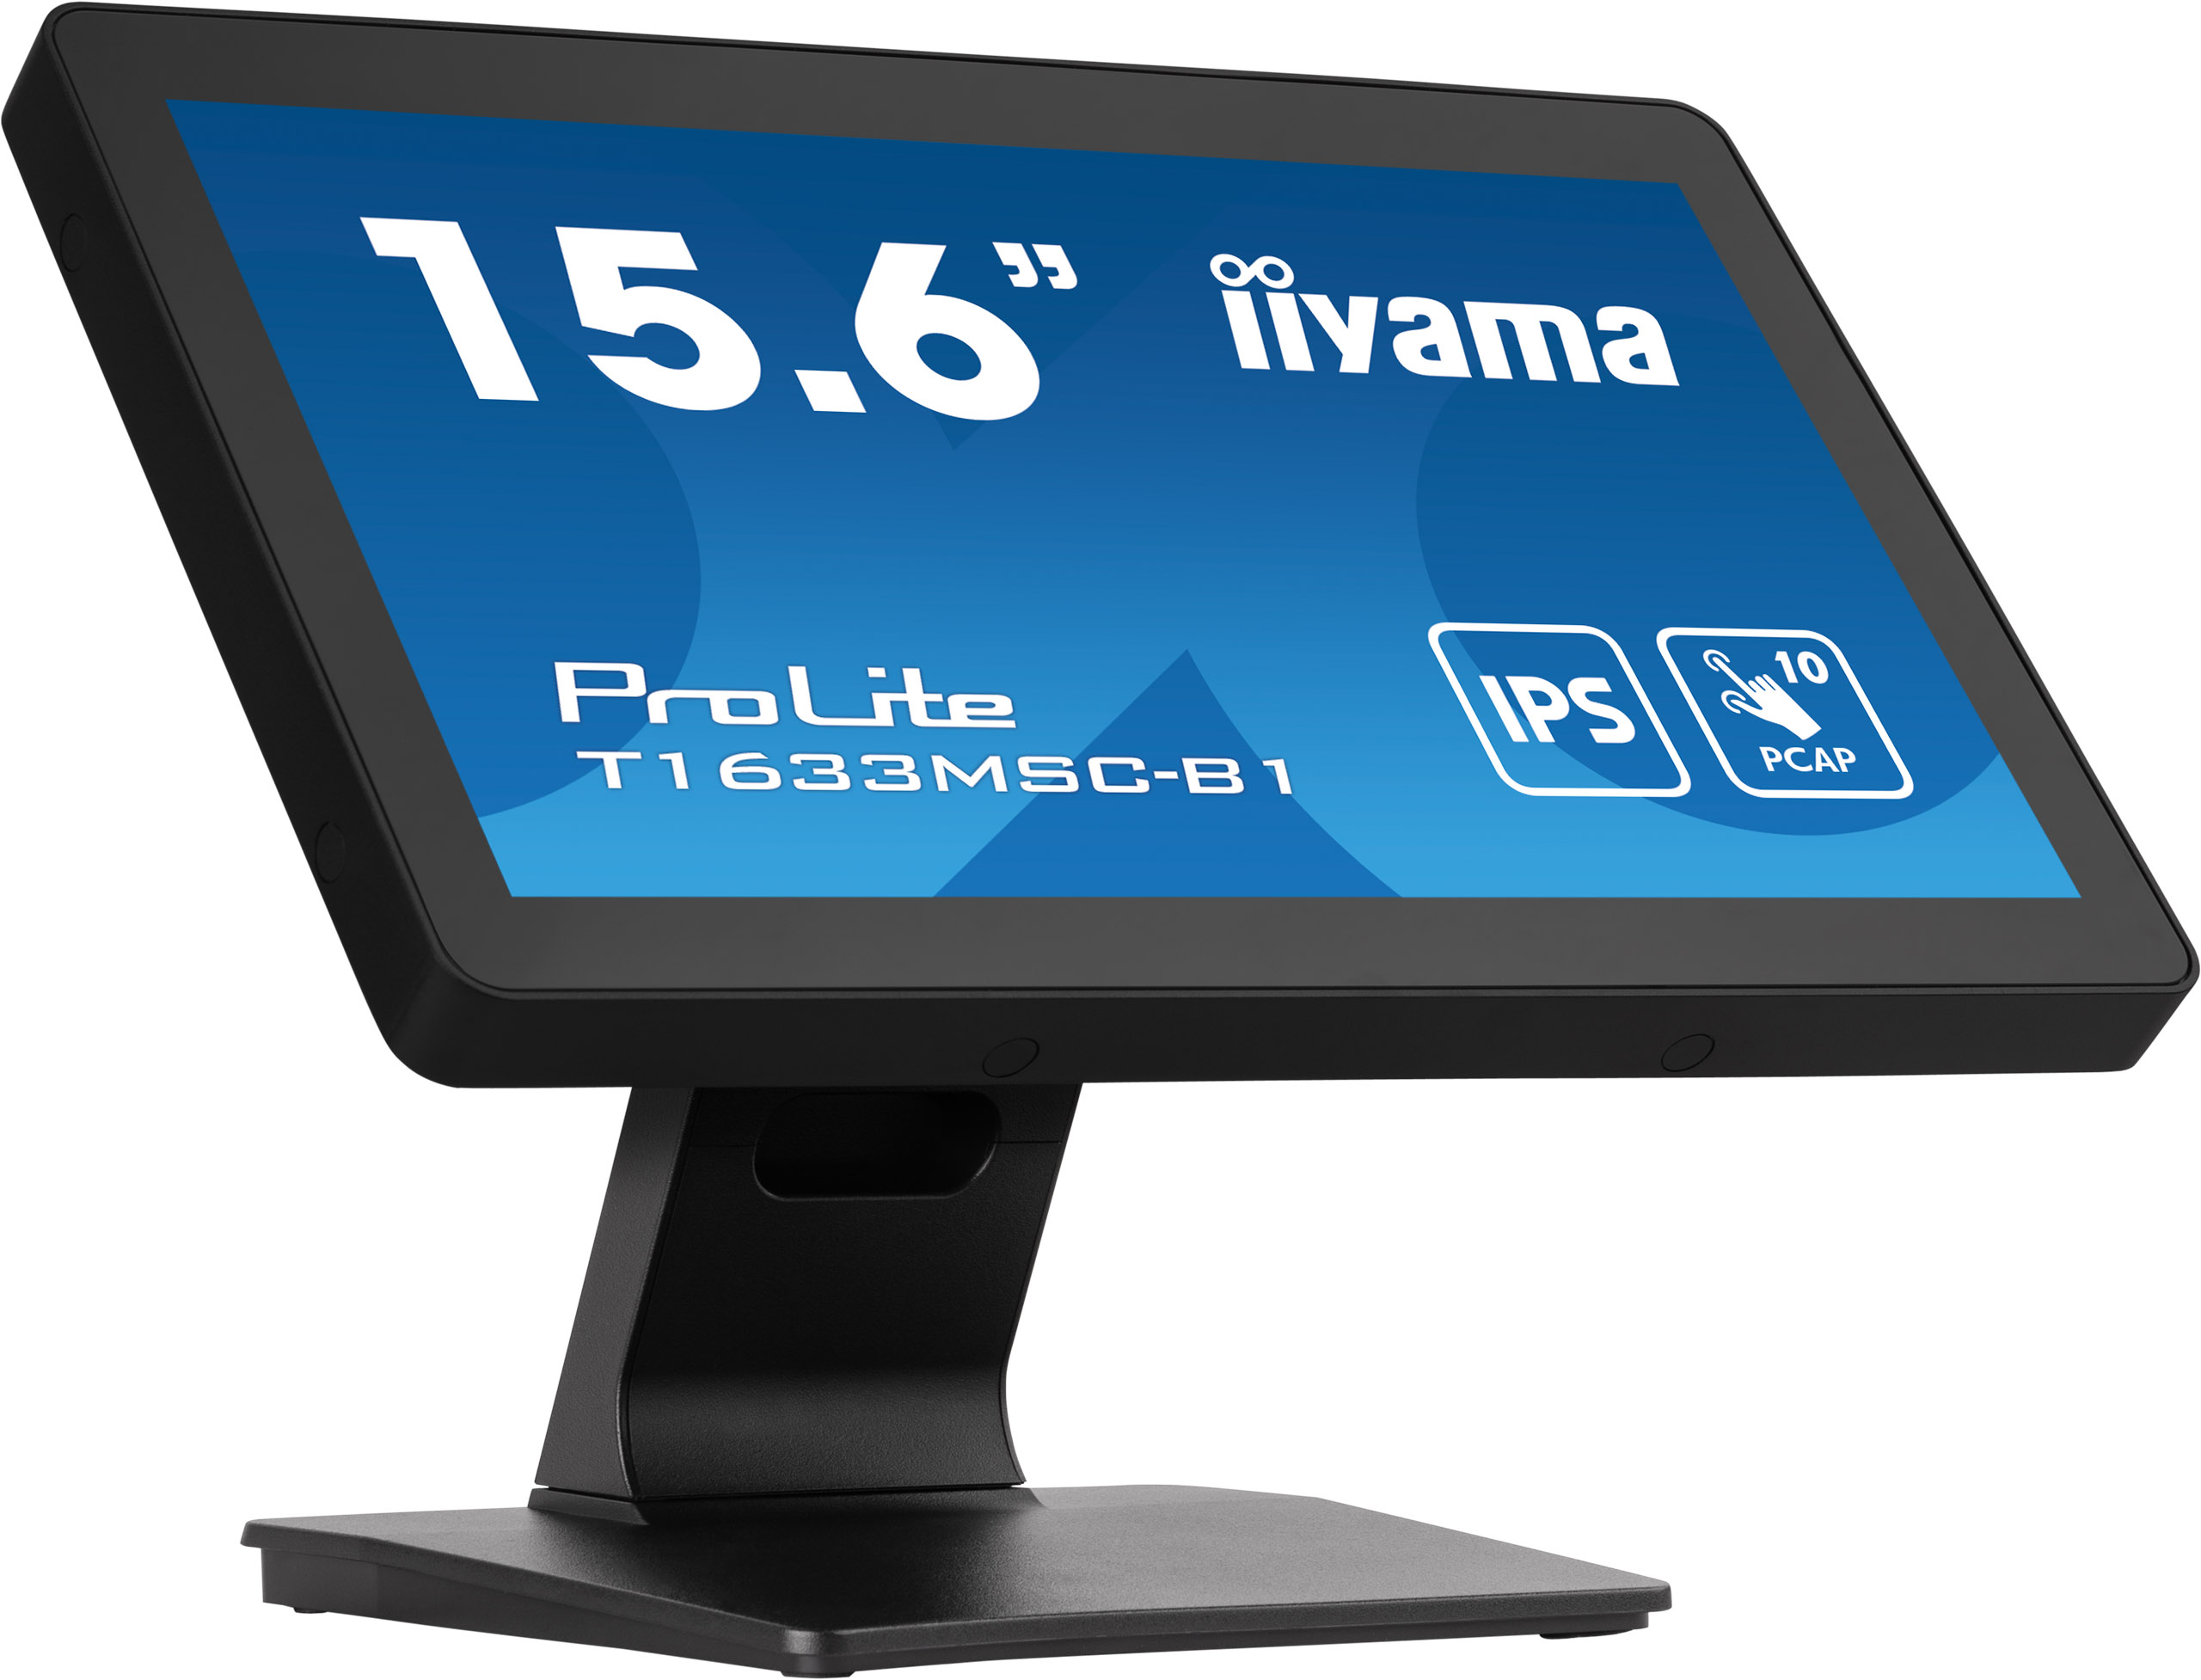 16" iiyama T1633MSC-B1 